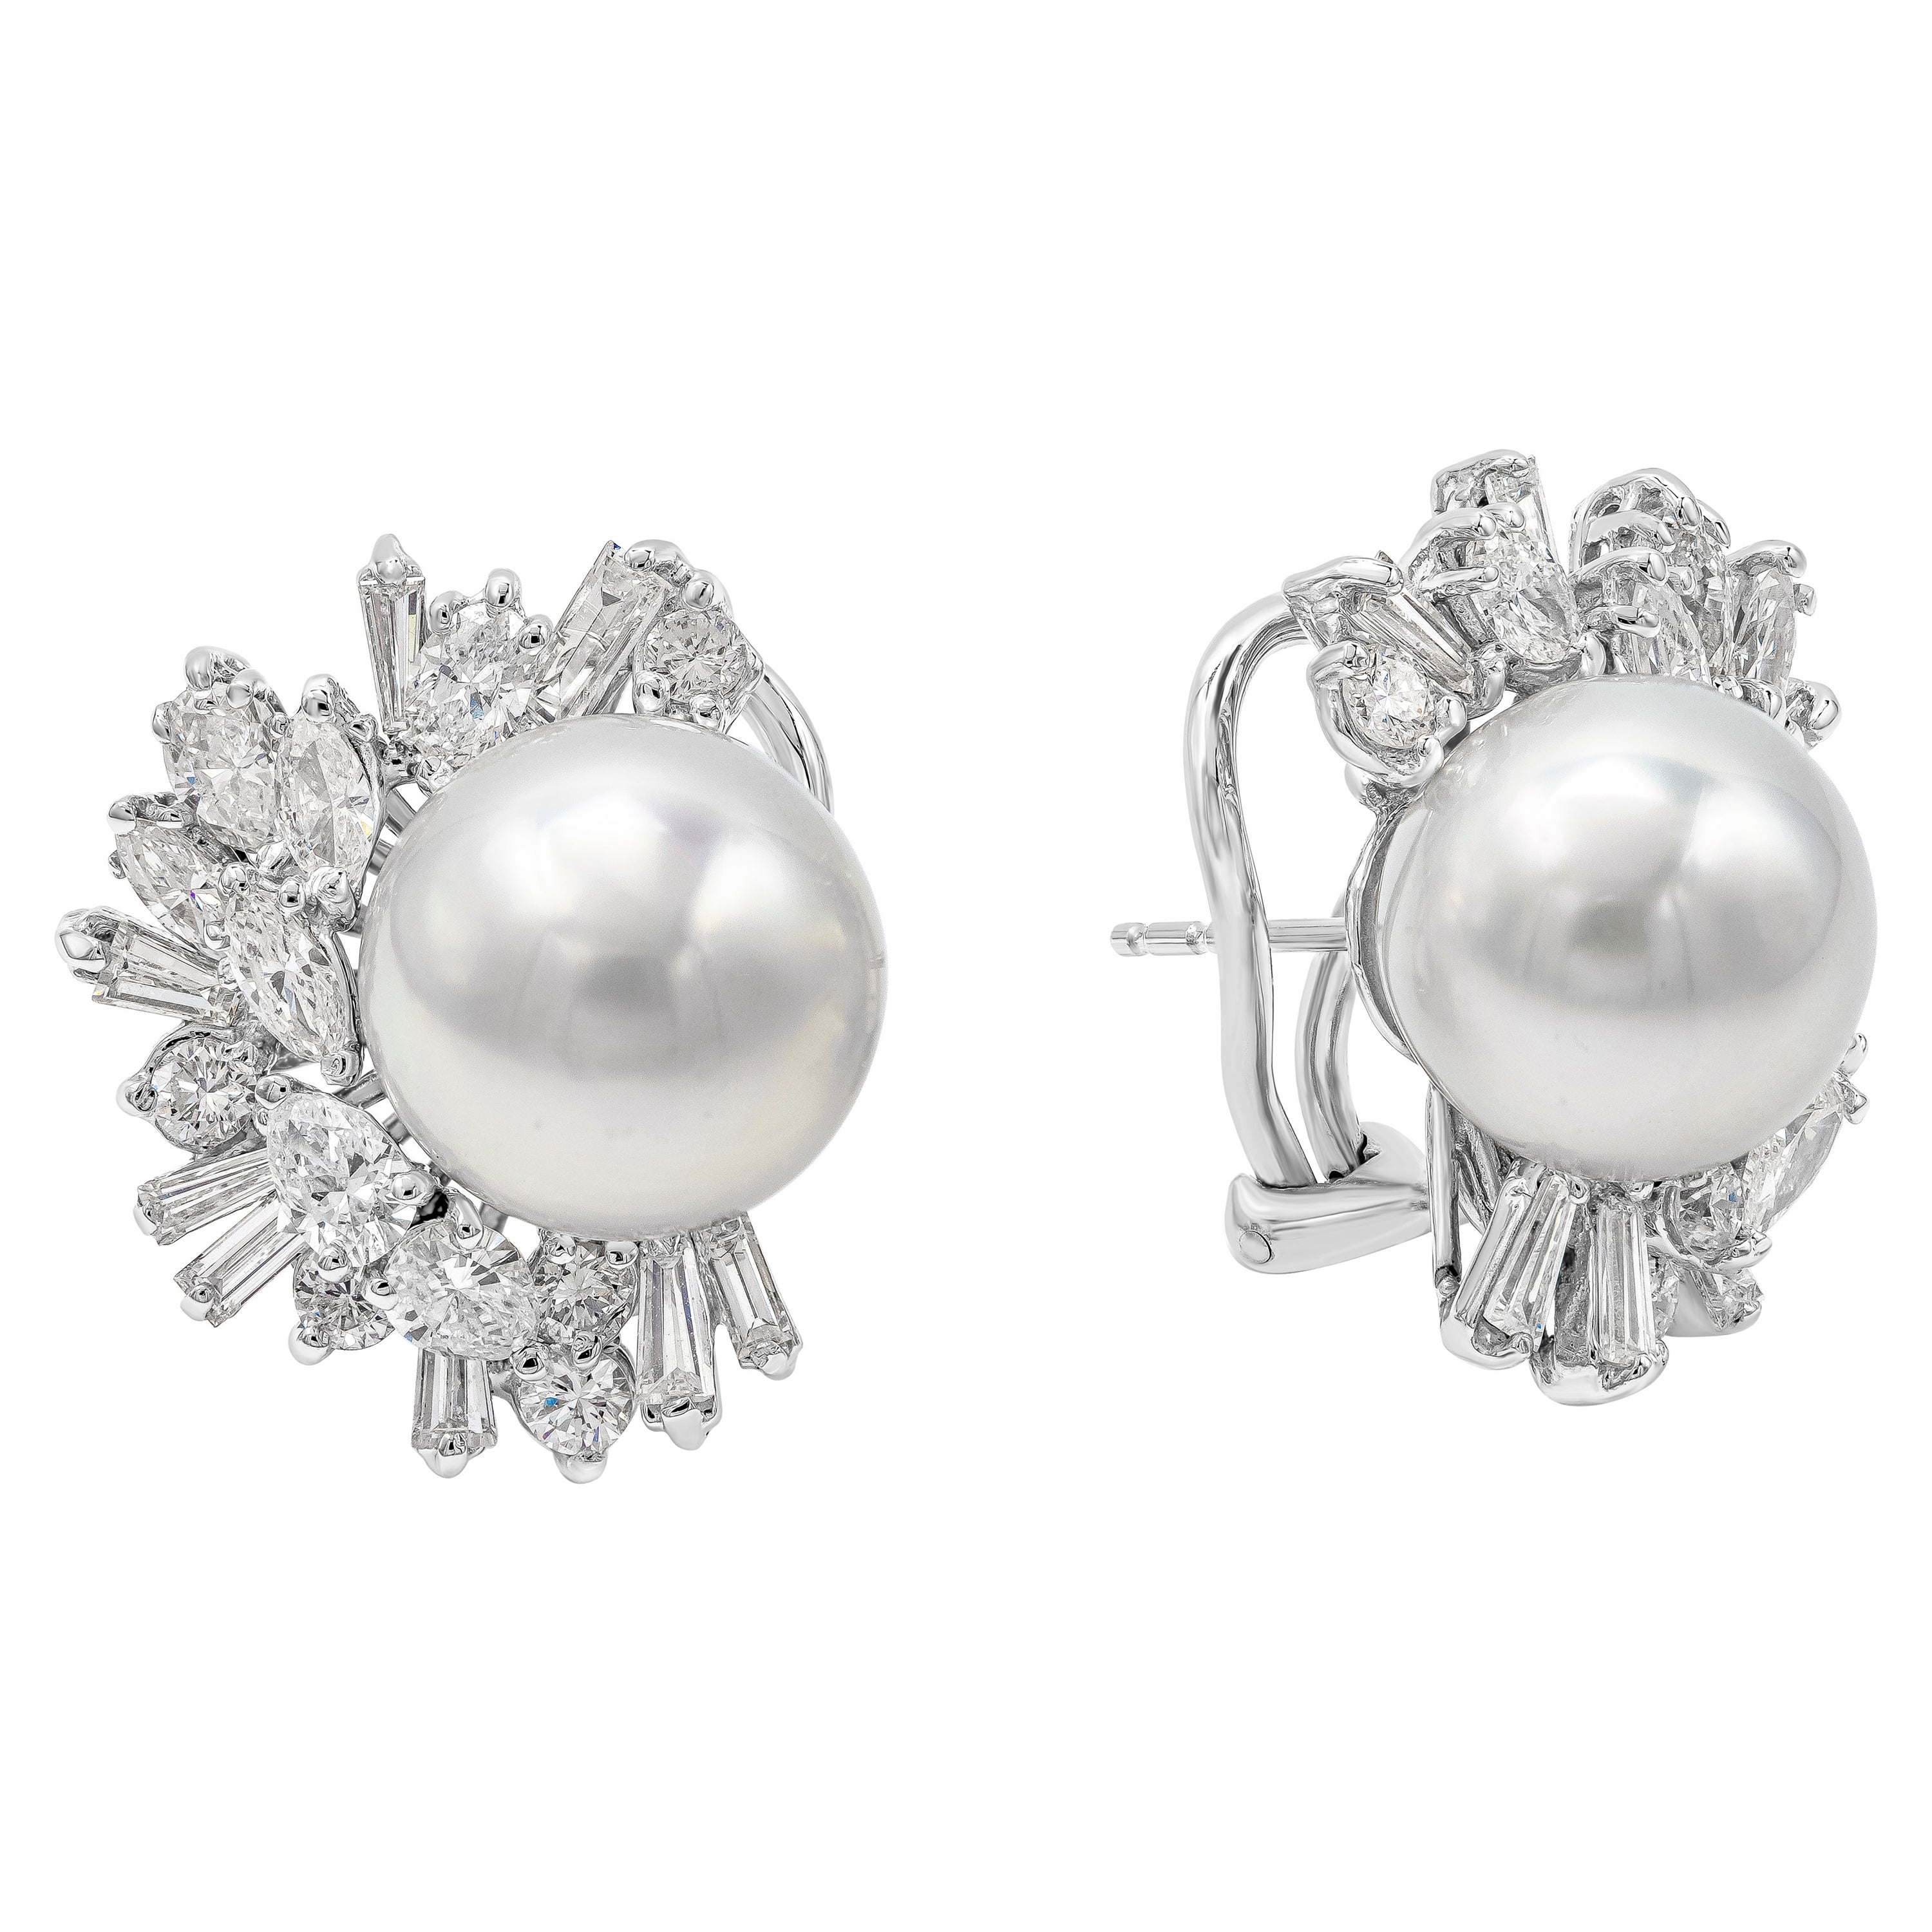 Roman Malakov 7.30 Carats Total Mixed Cut Diamond and White Pearl Clip Earrings